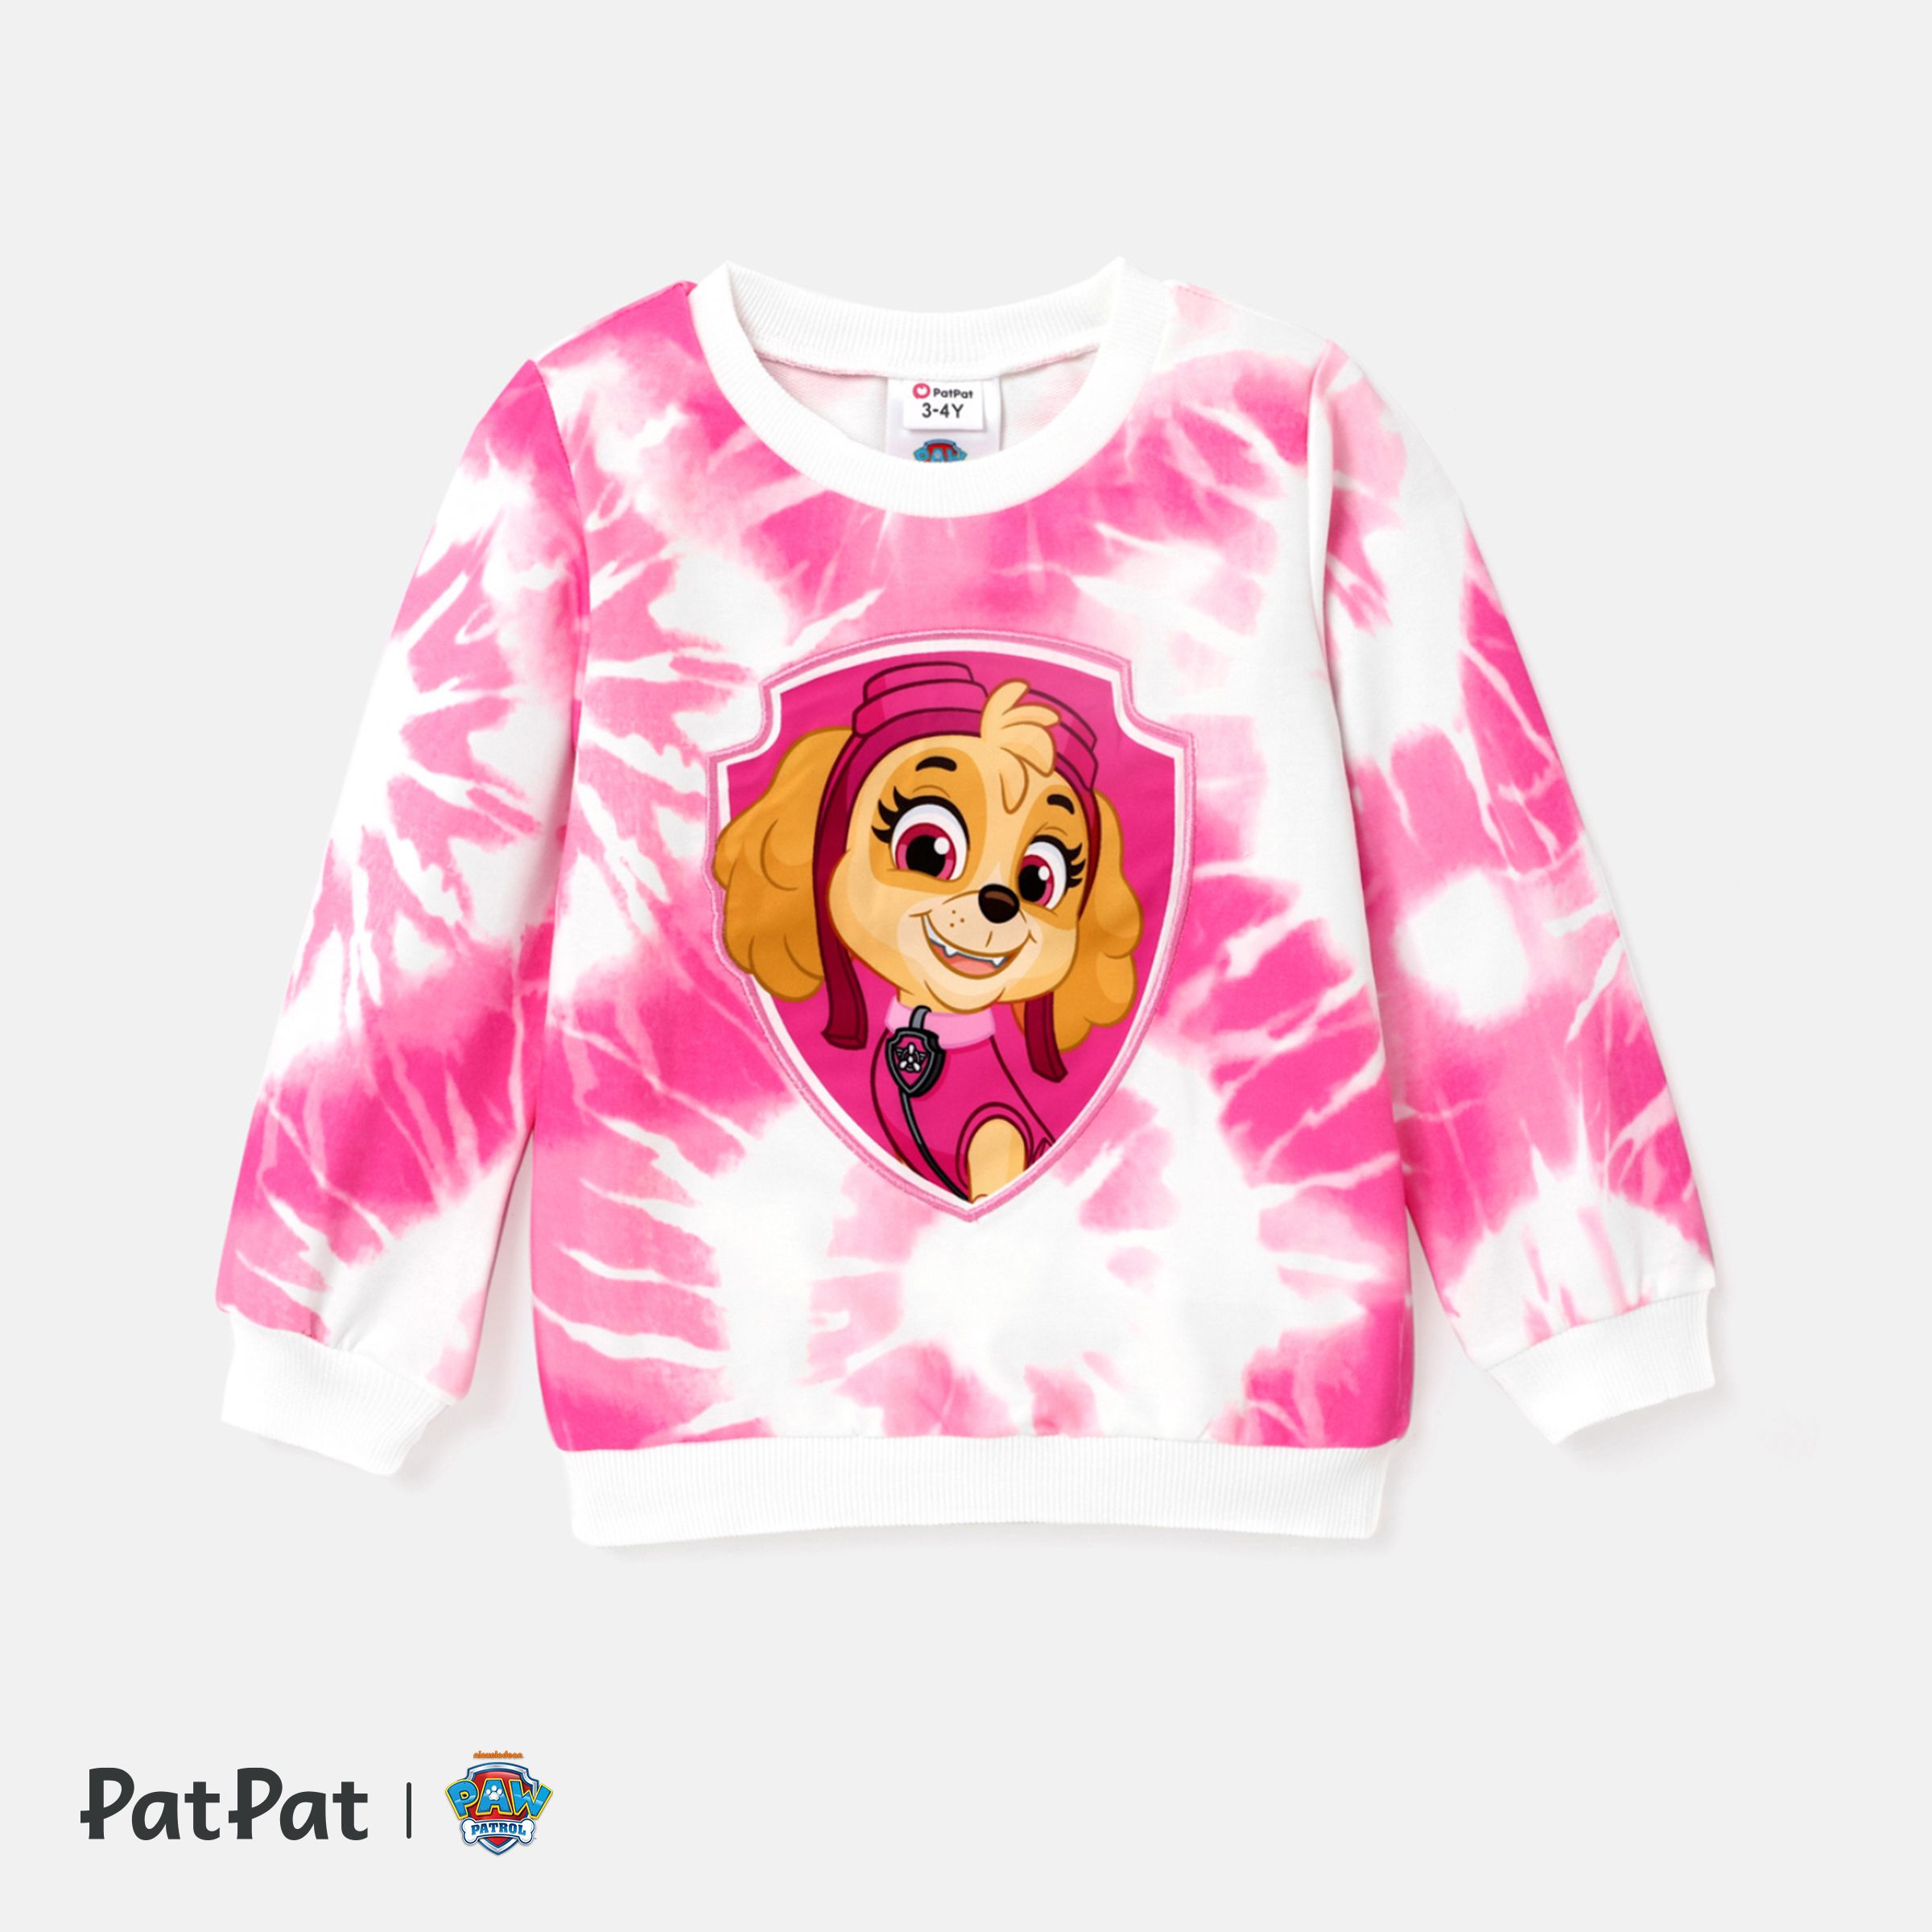 PAW Patrol Toddler Girl/Boy Character Print Sweat-shirt à Manches Longues